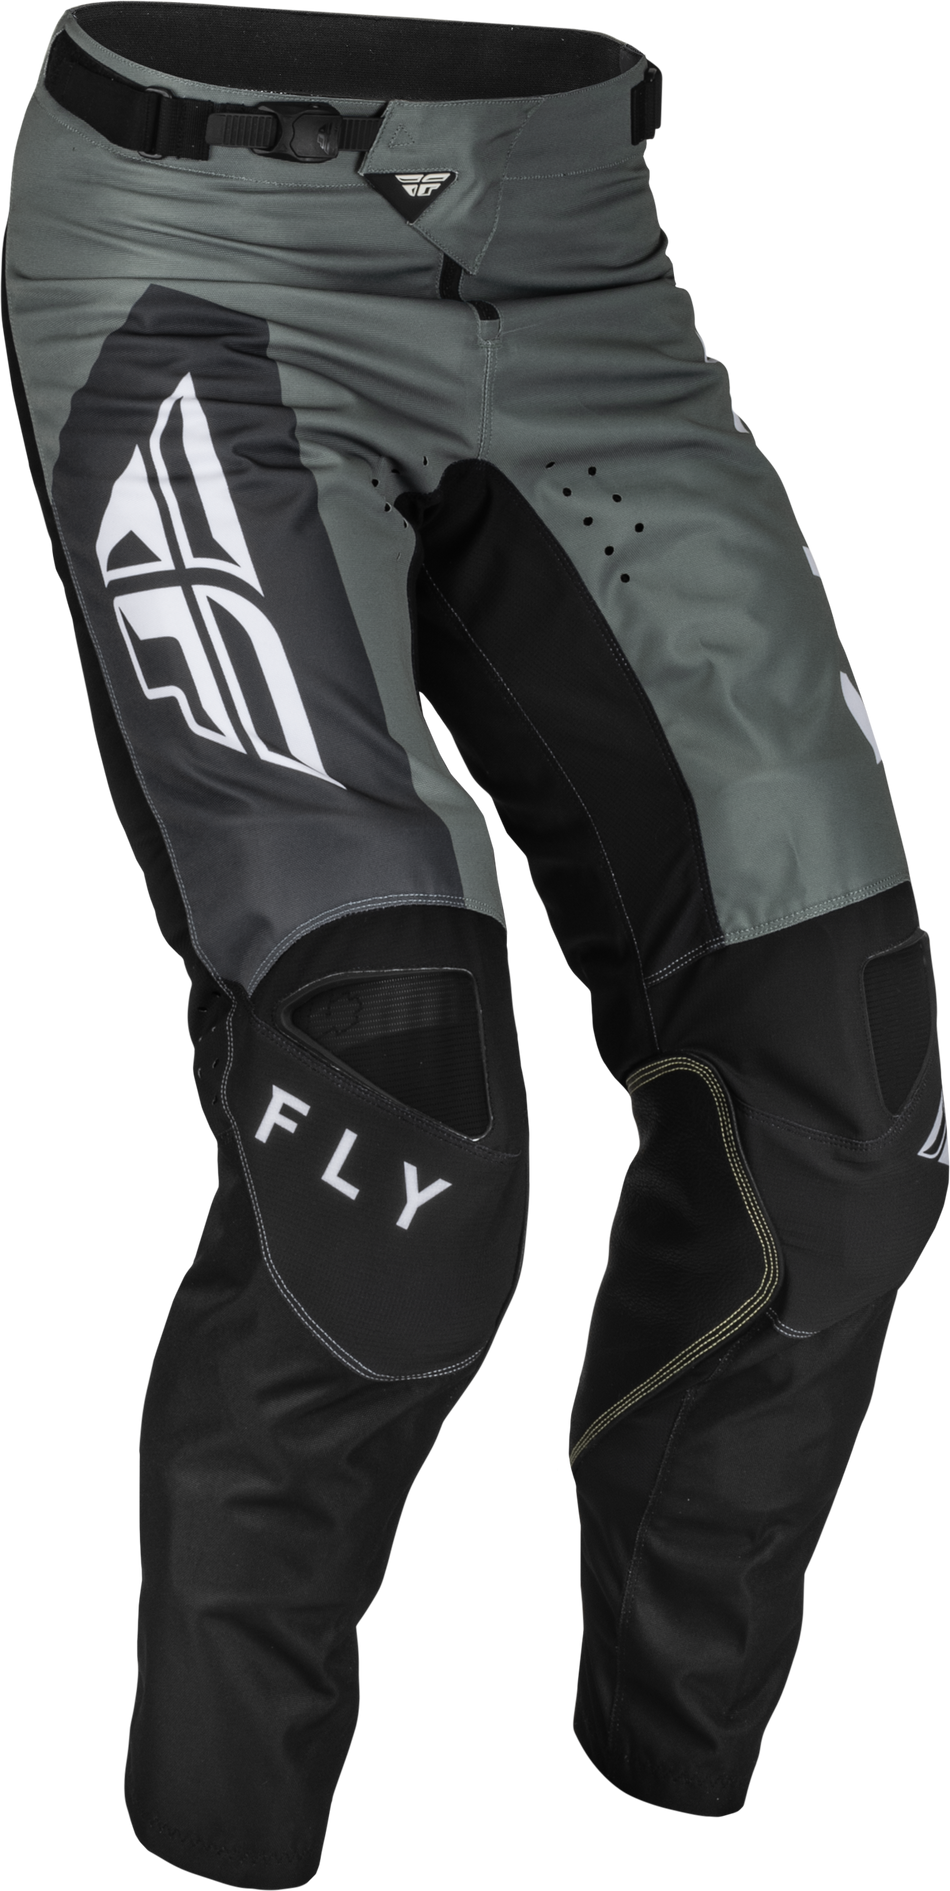 FLY RACING Kinetic Jet Pants Grey/Dark Grey/Black Sz 28 376-53328